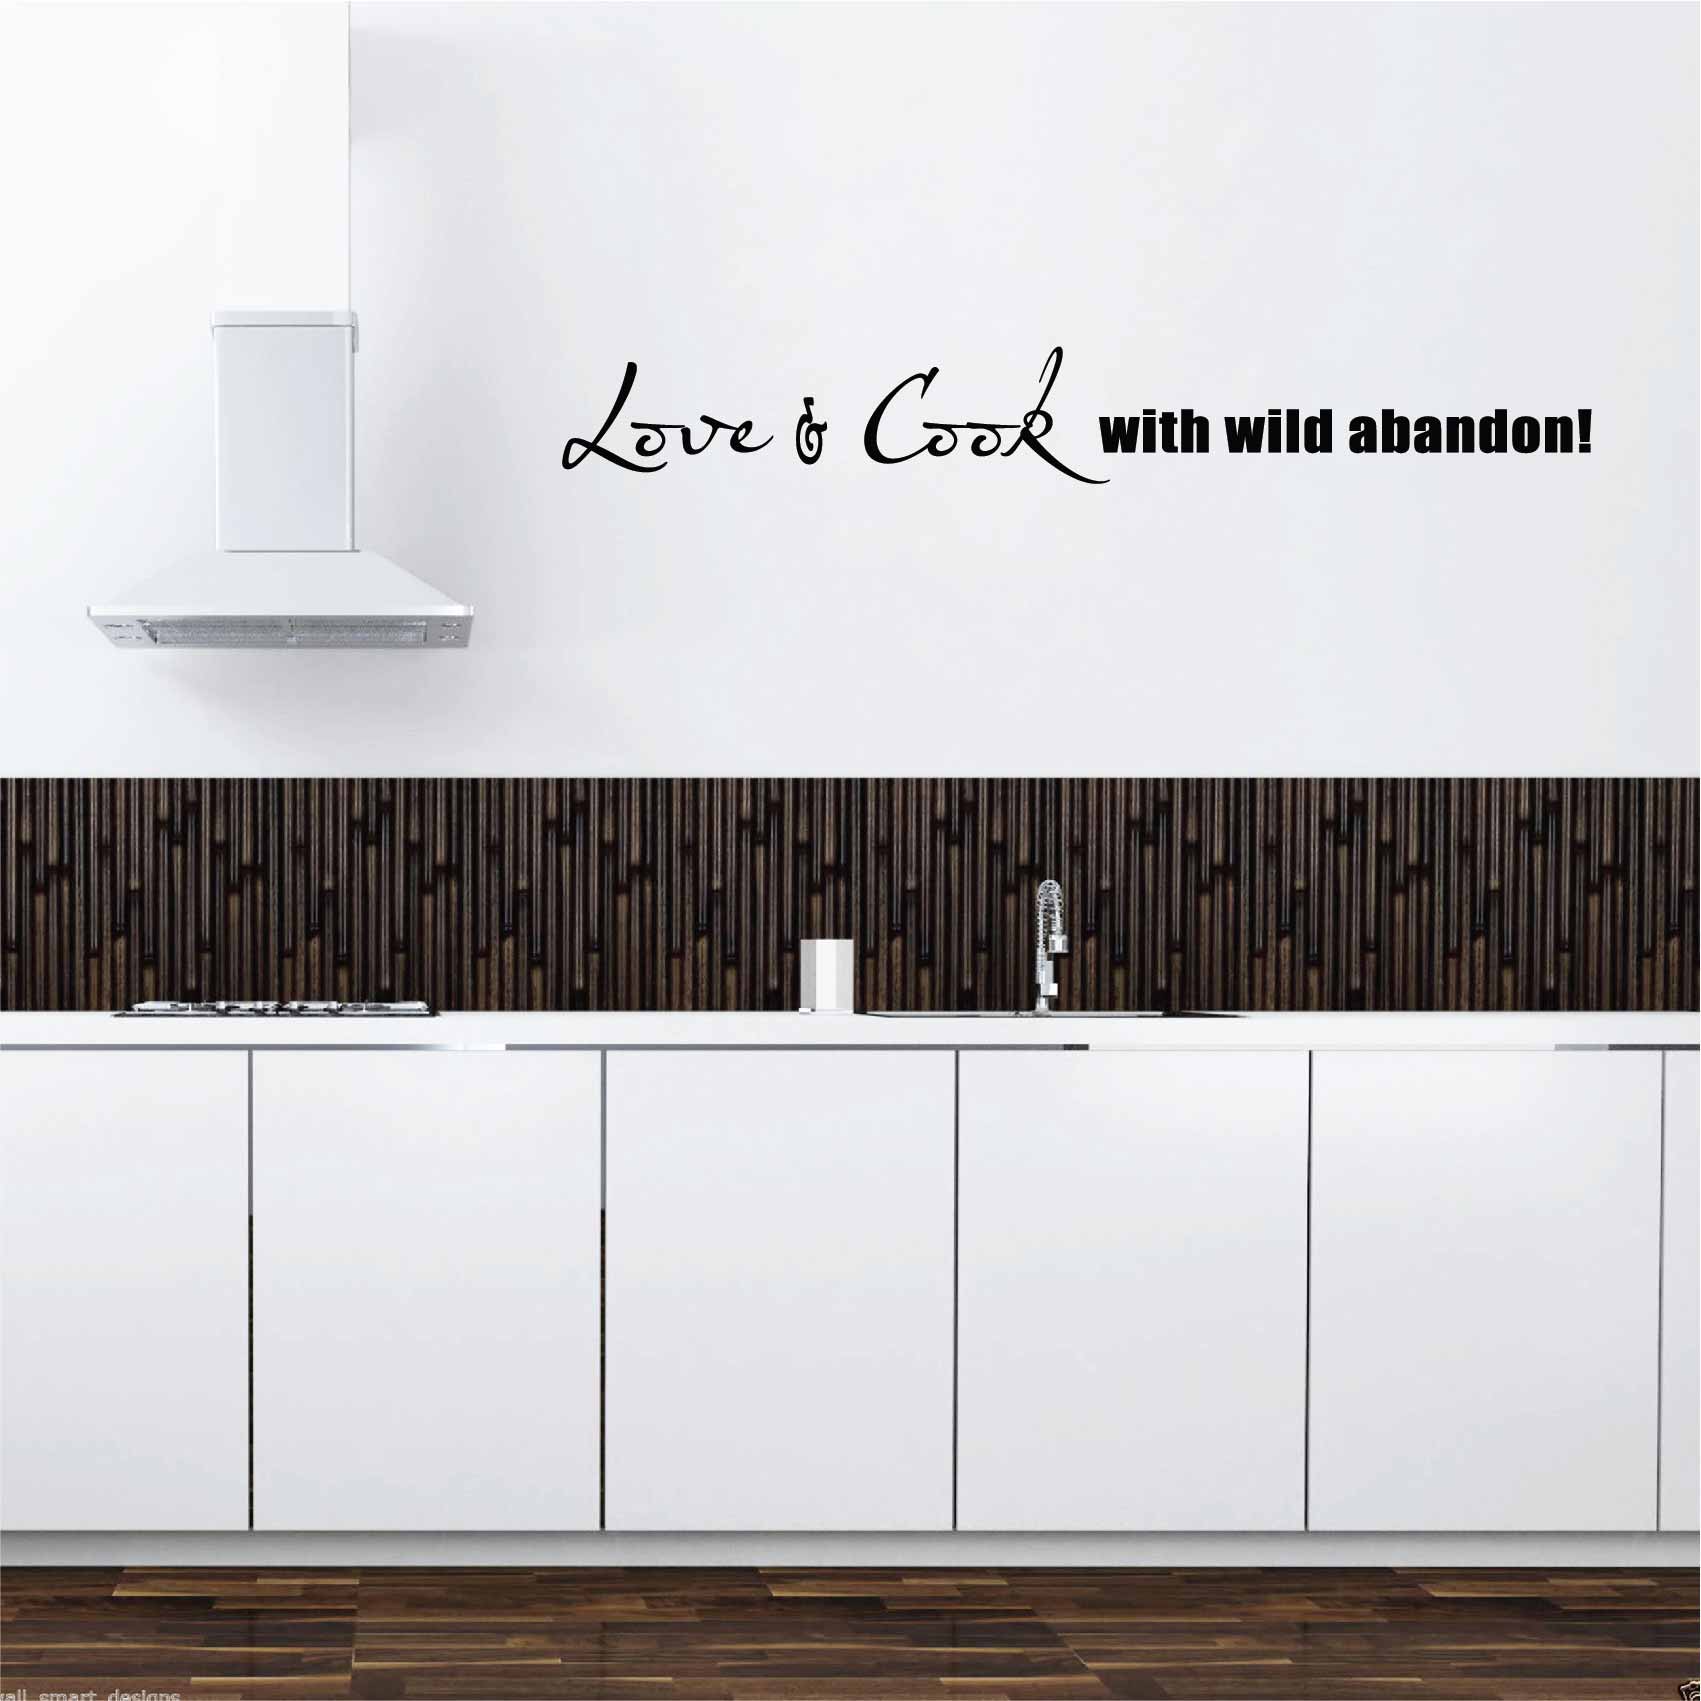 stickers-love-and-cook-ref49cuisine-stickers-muraux-cuisine-autocollant-deco-cuisine-chambre-salon-sticker-mural-cuisine-decoration